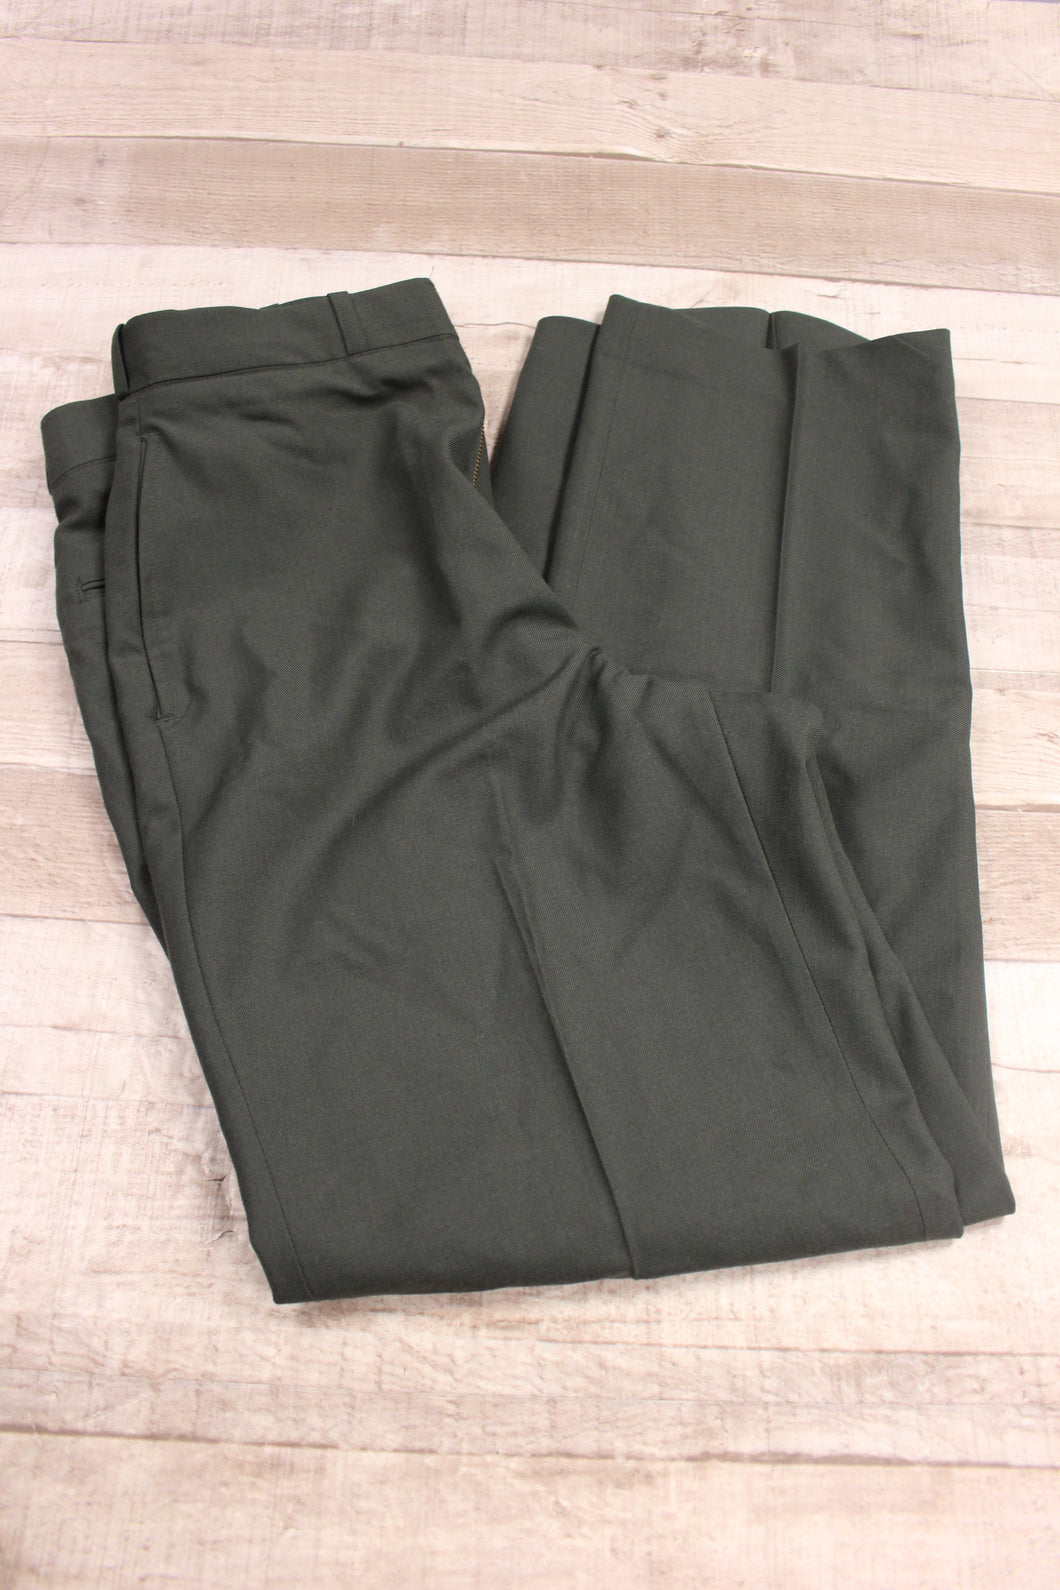 US Military Green Dress Uniform Trousers Pants Hemmed 8405-01-105-2458 30R -Used